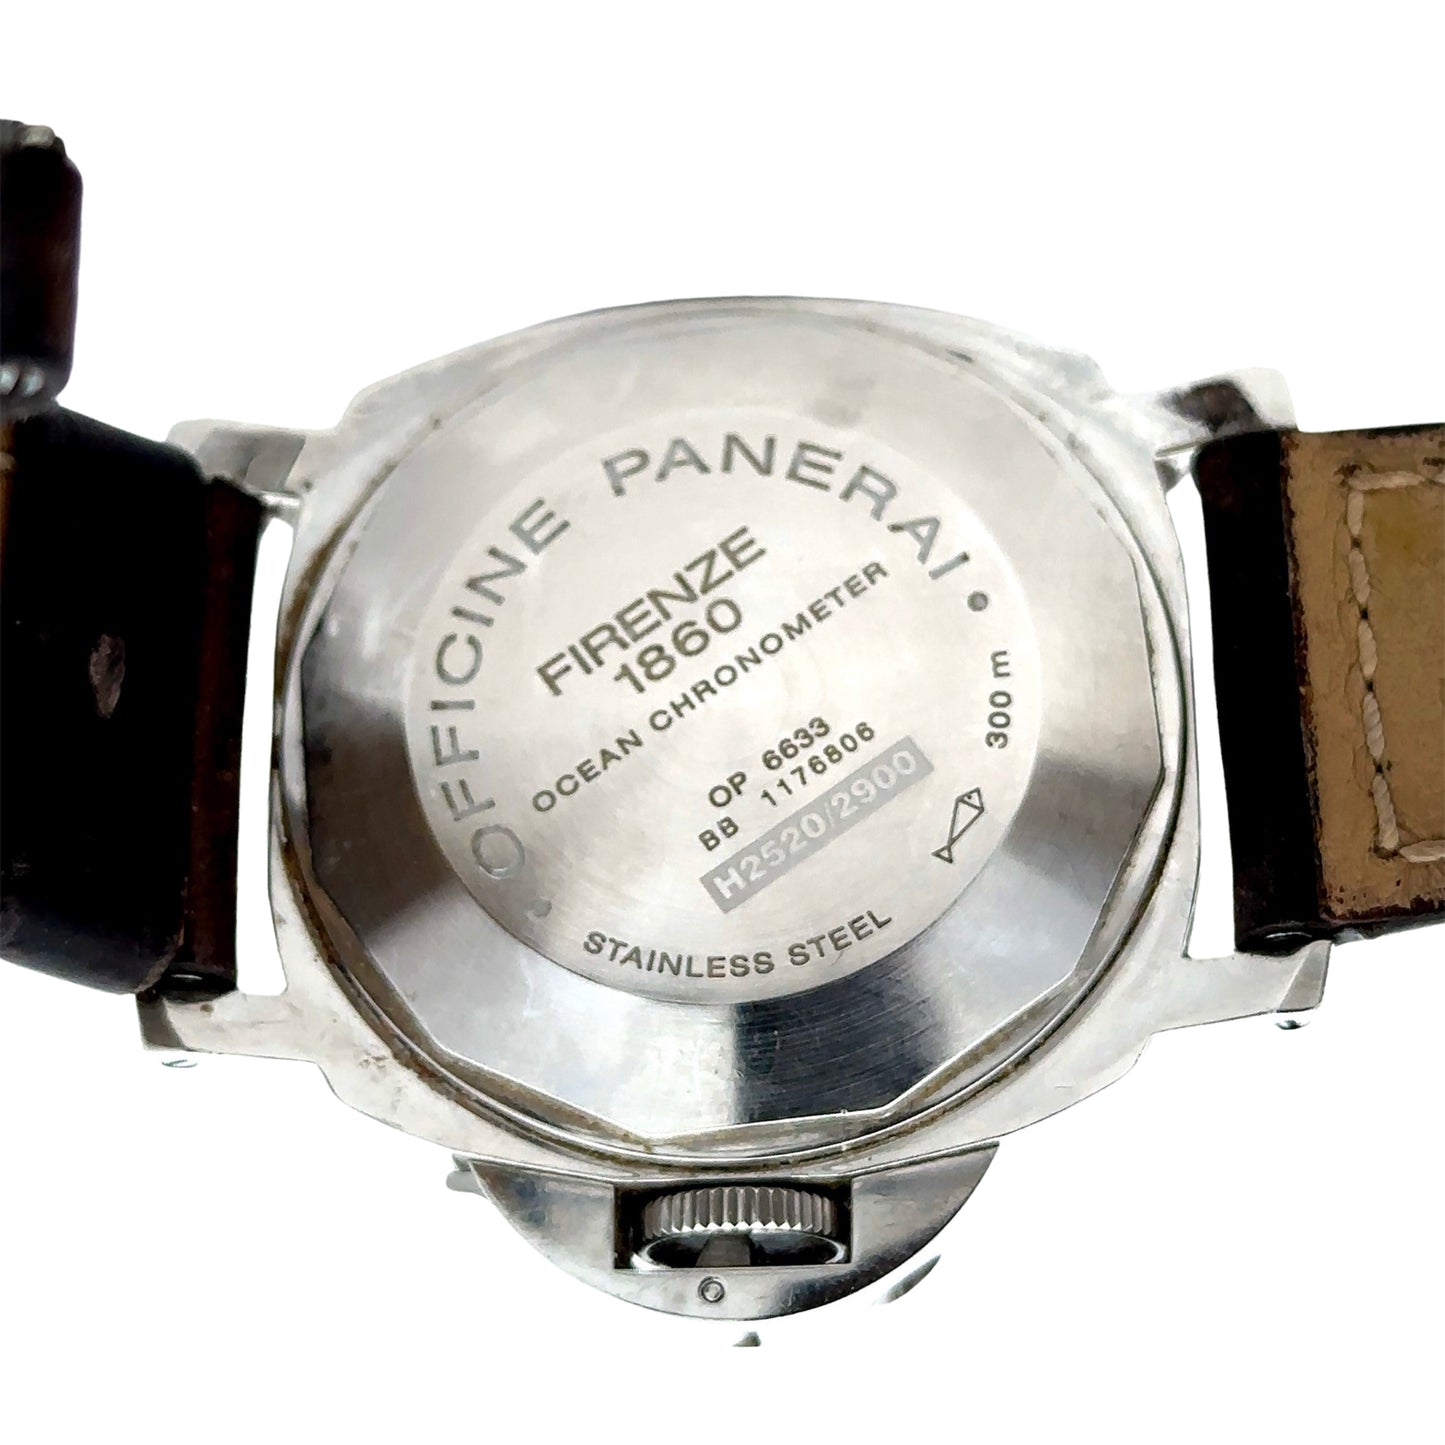 Back of watch case with "officine panerai" "firenze 1860" "ocean chronometer" 